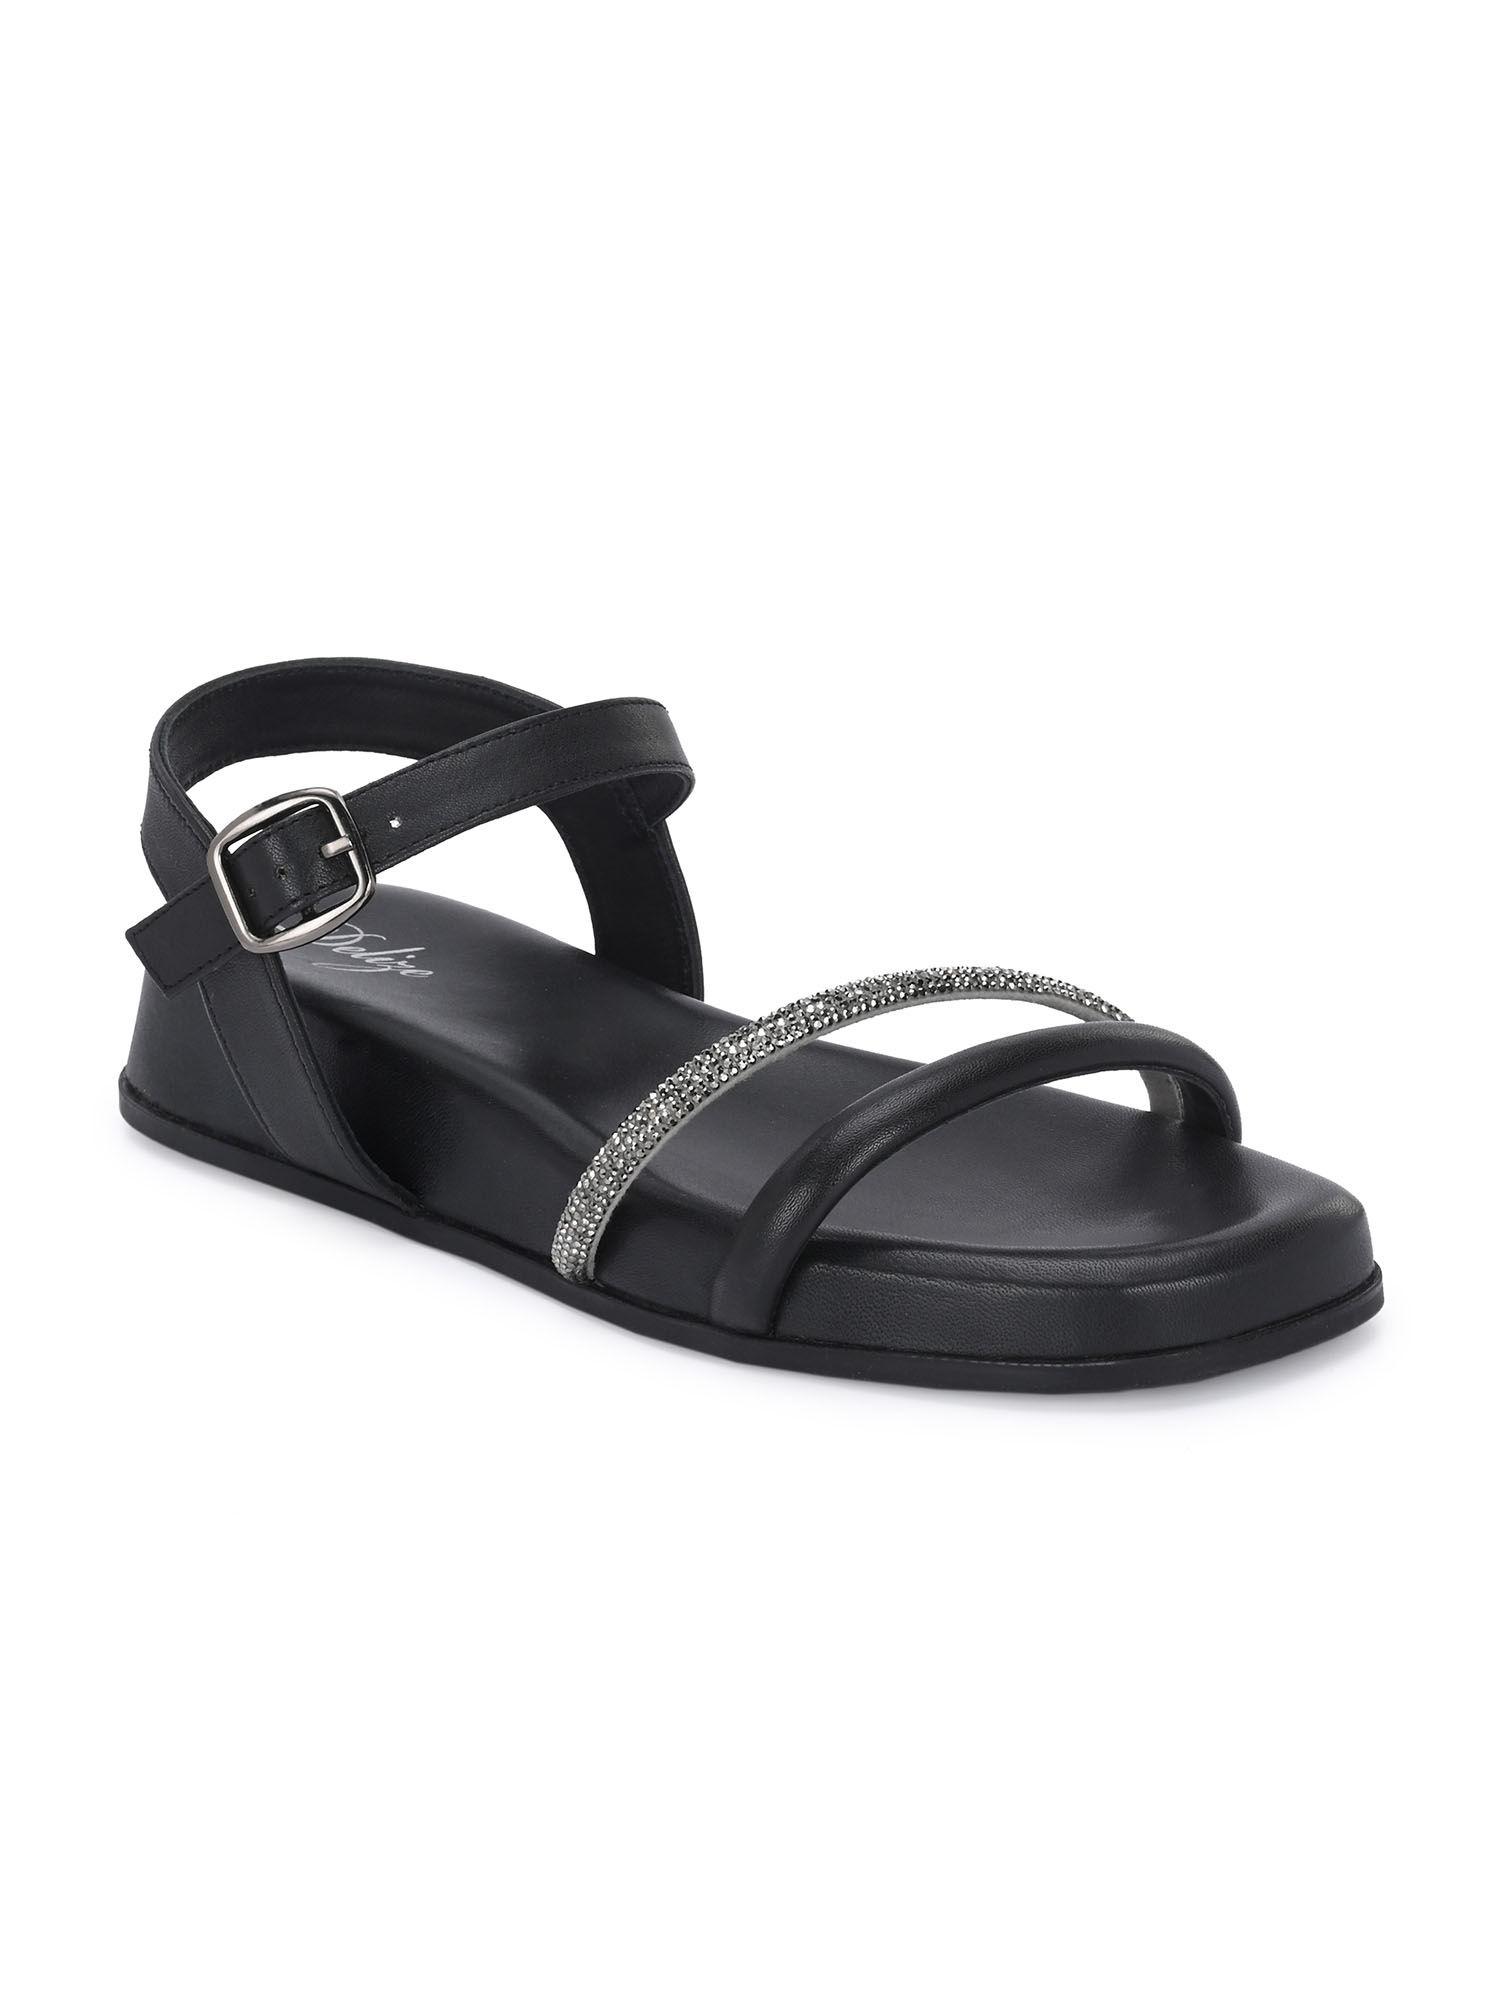 women black flatform sandals